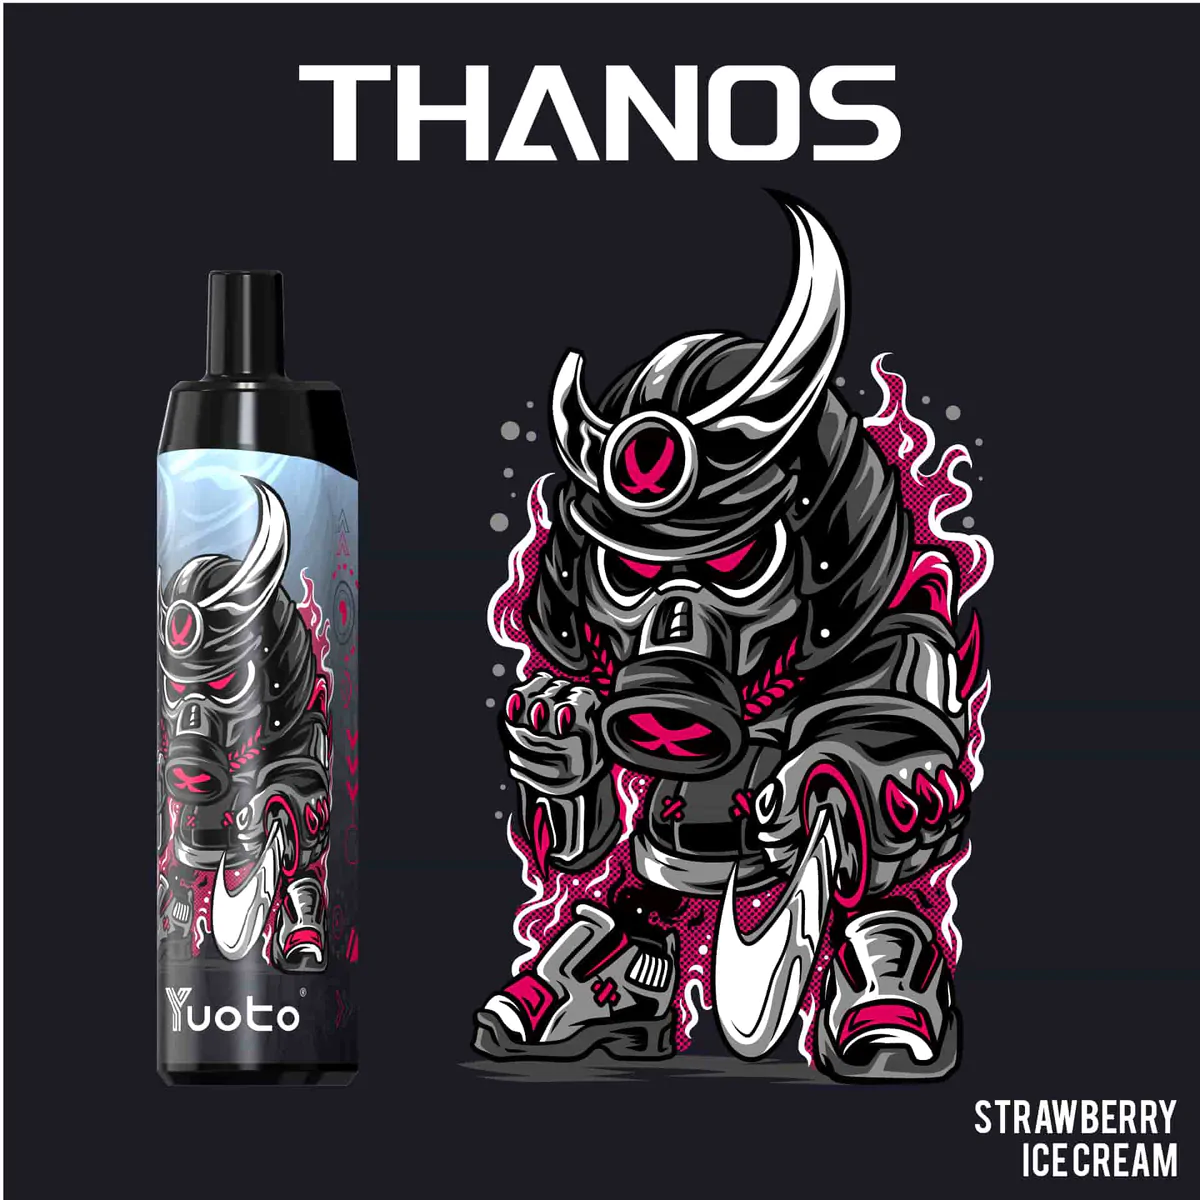 Yuoto Thanos Strawberry Ice-Cream